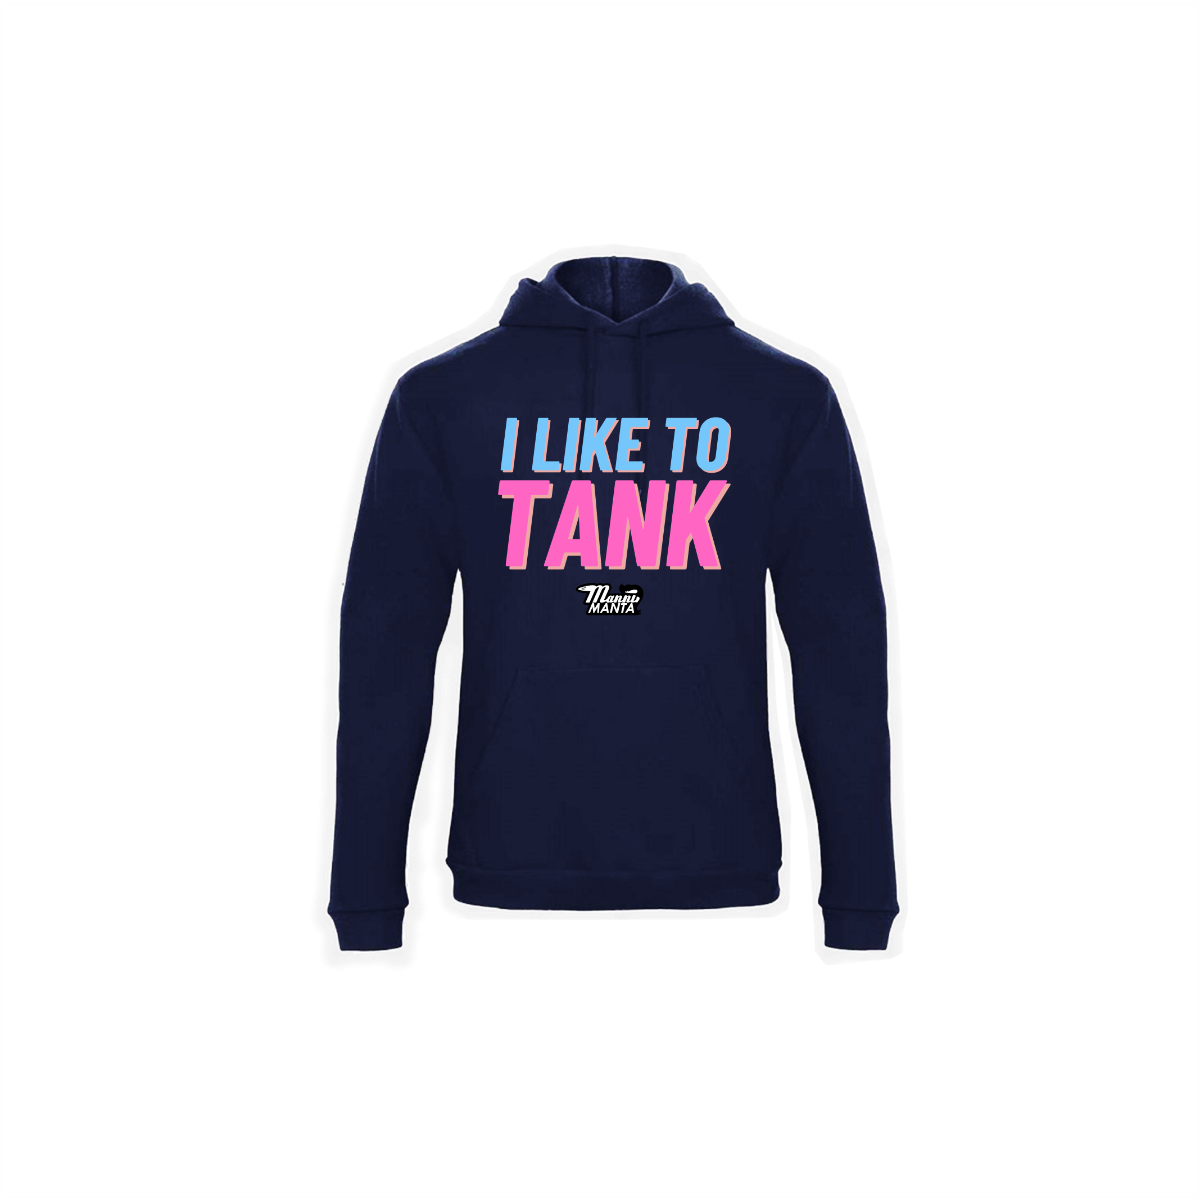 Kapuzen Sweat-Shirt "I LIKE TO TANK" dunkelblau